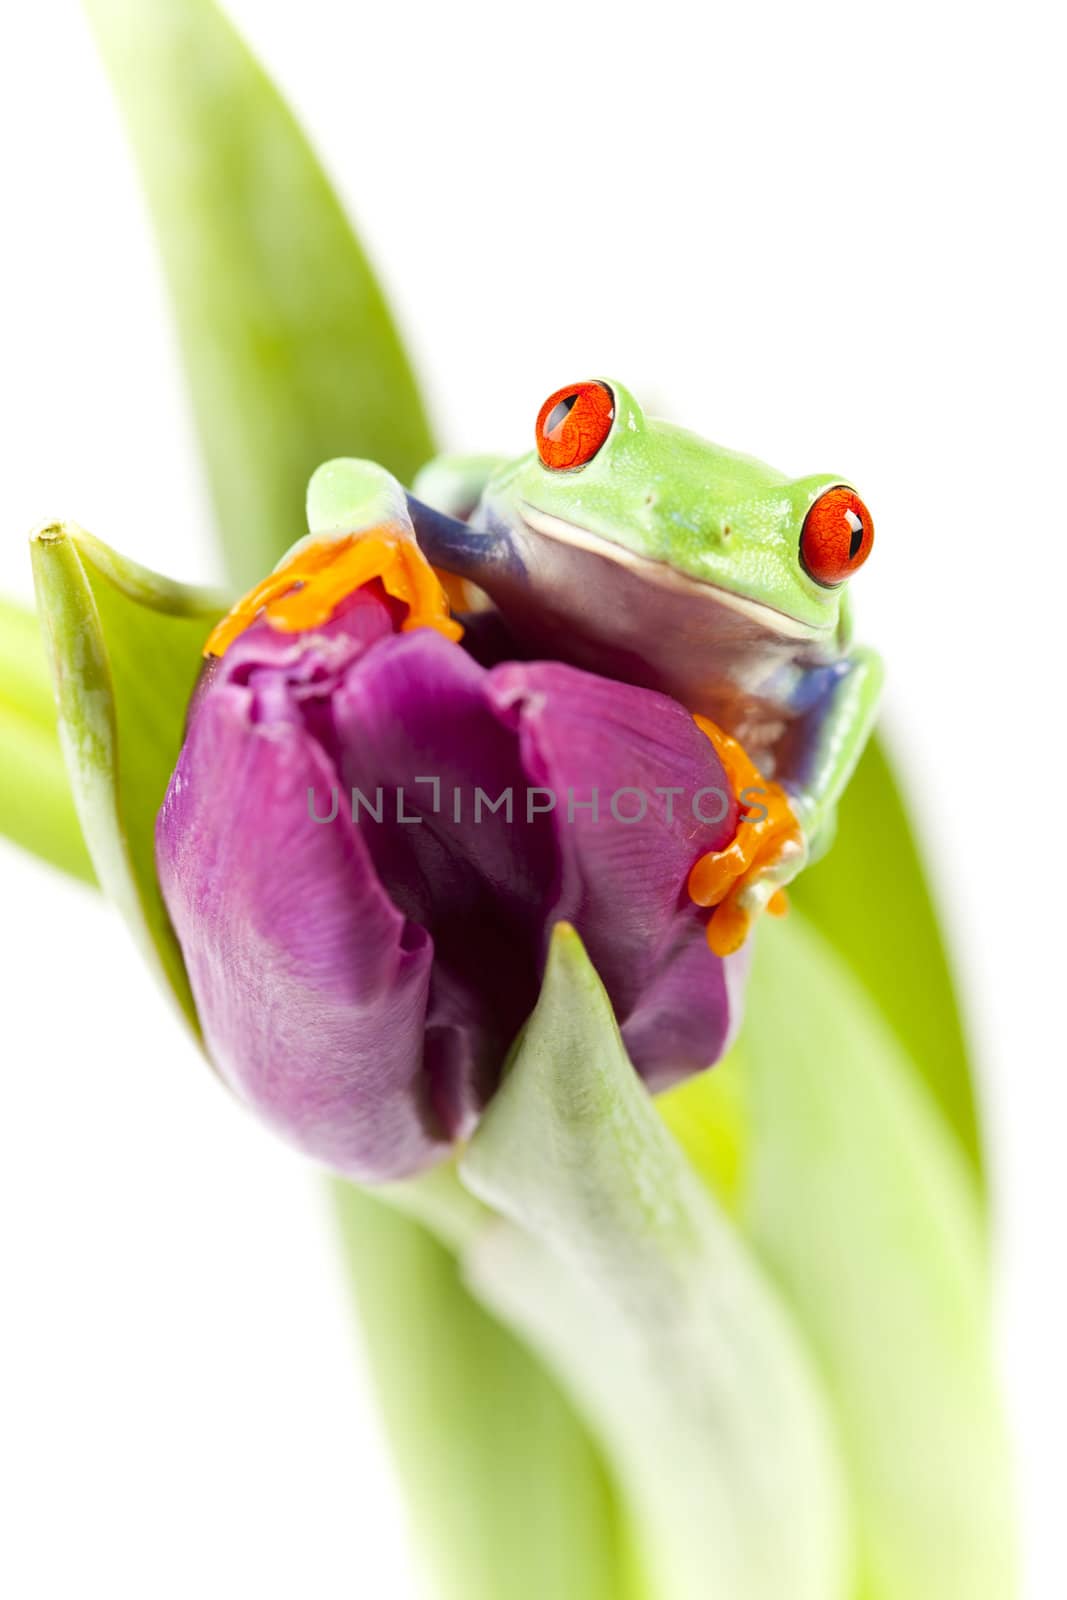 Red eyed tree frog sitting on tulip